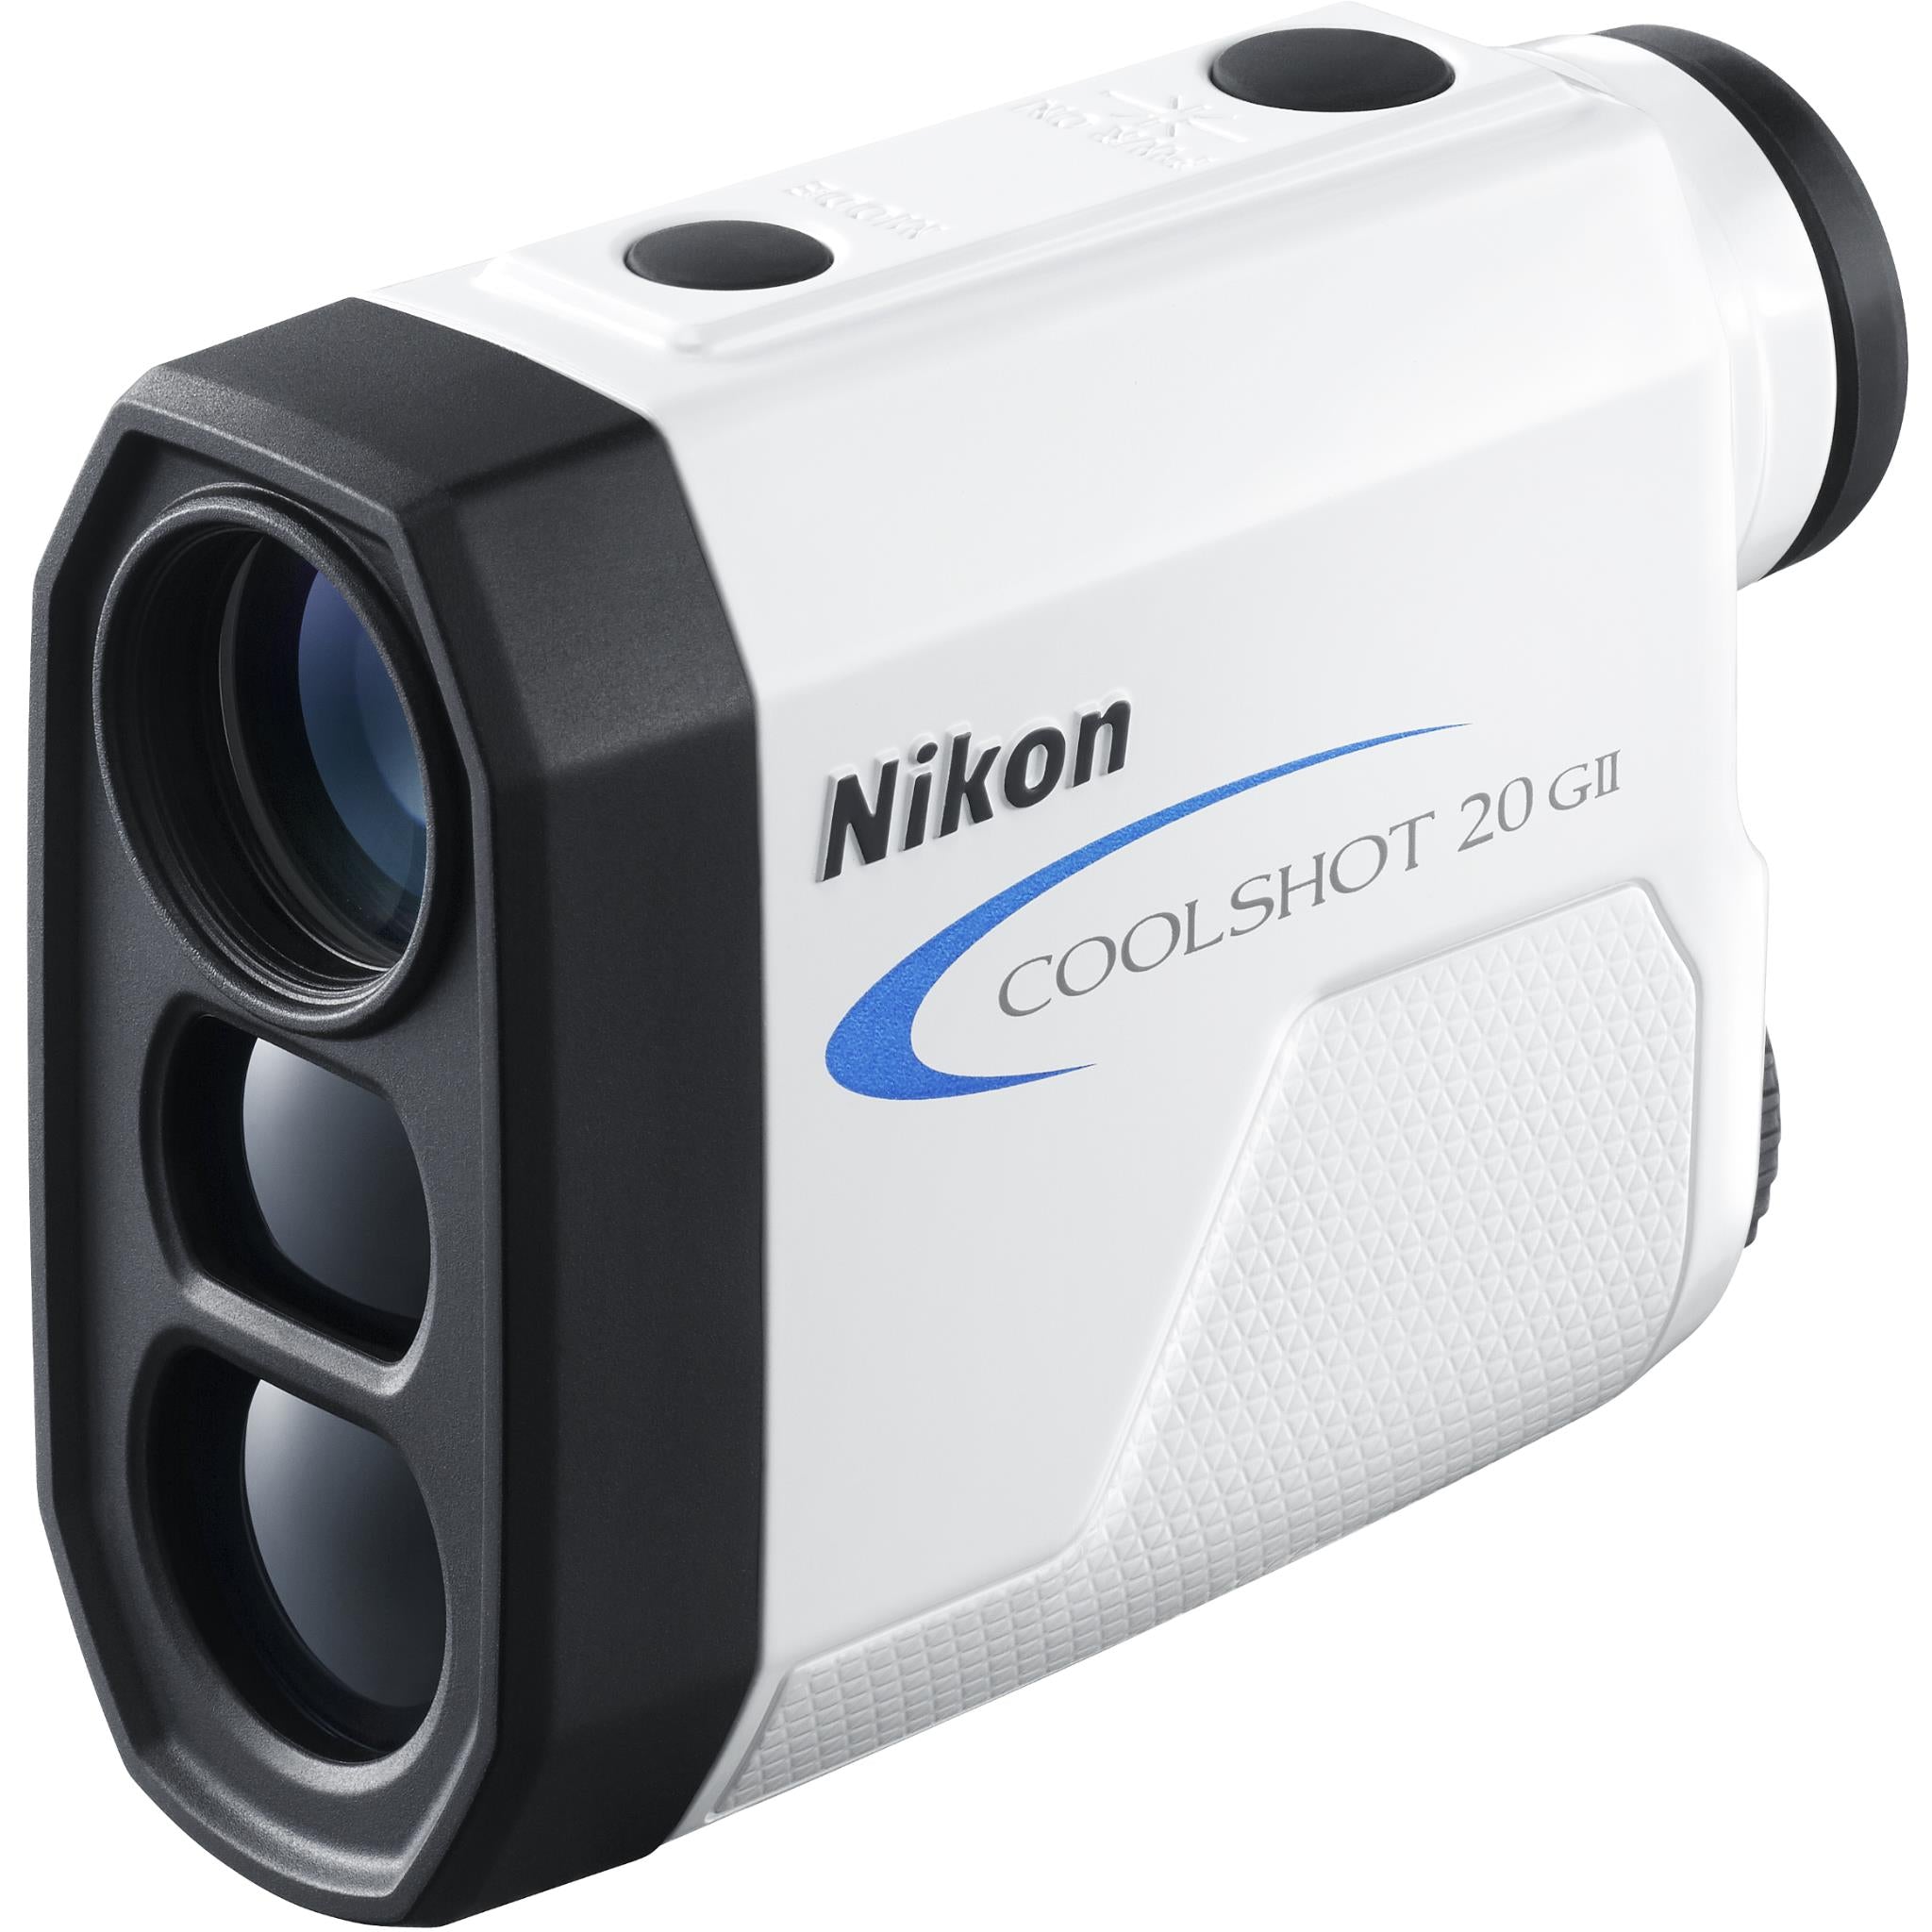 Nikon CoolShot 20 GII Range Finder - JB Hi-Fi